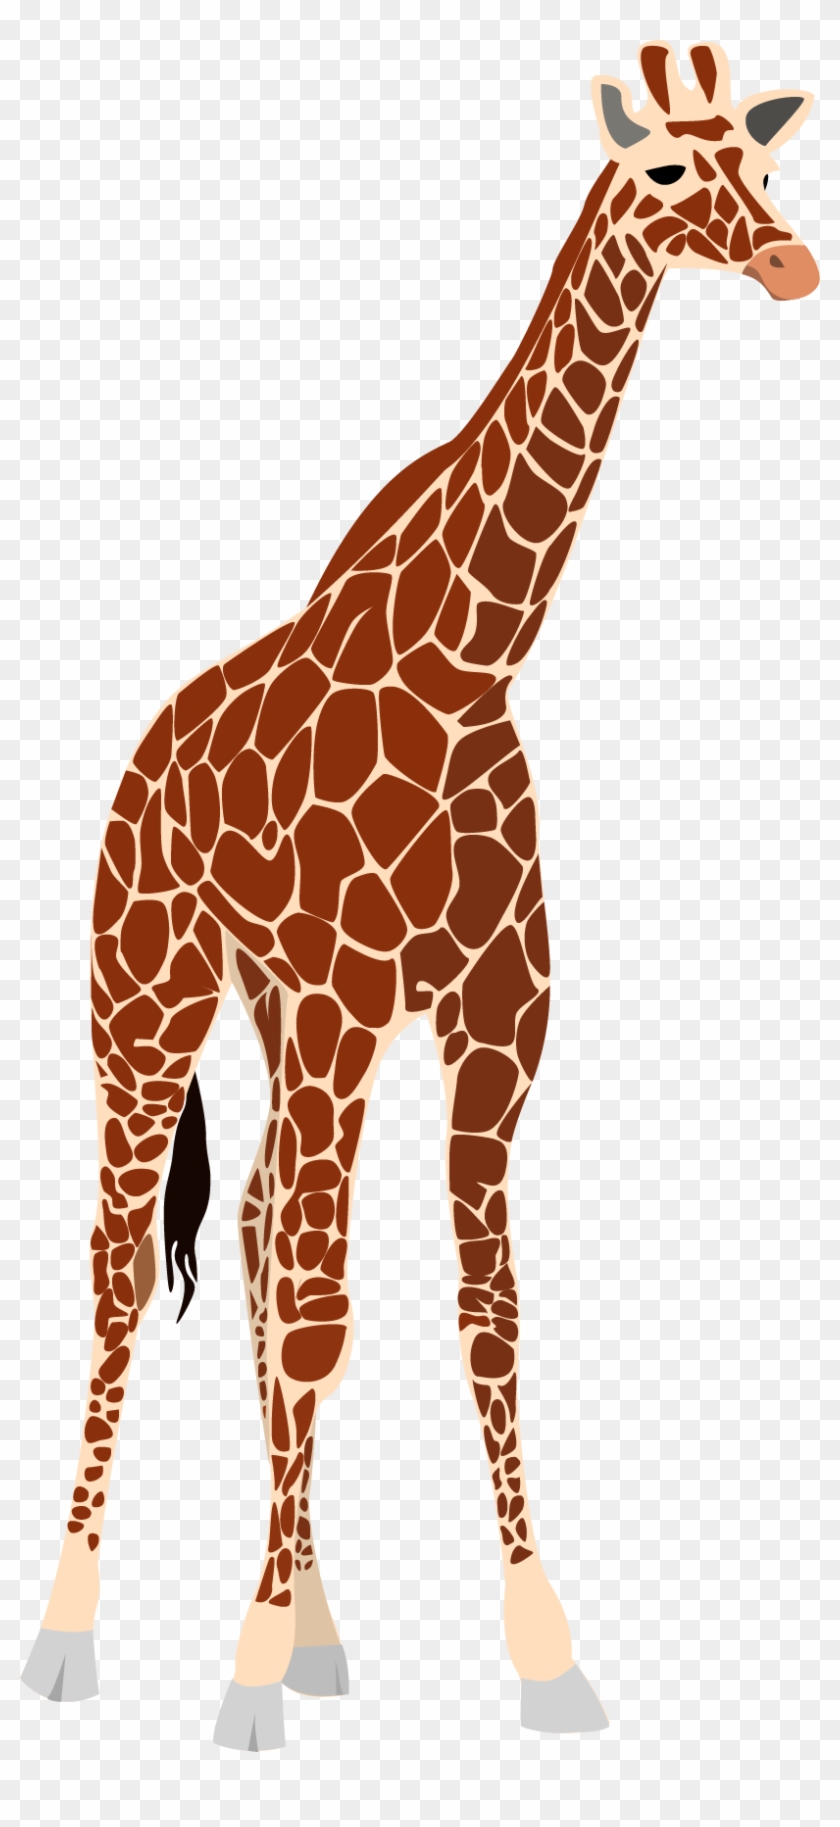 Vector Clipart Giraffe - Giraffe Free Vector #918838